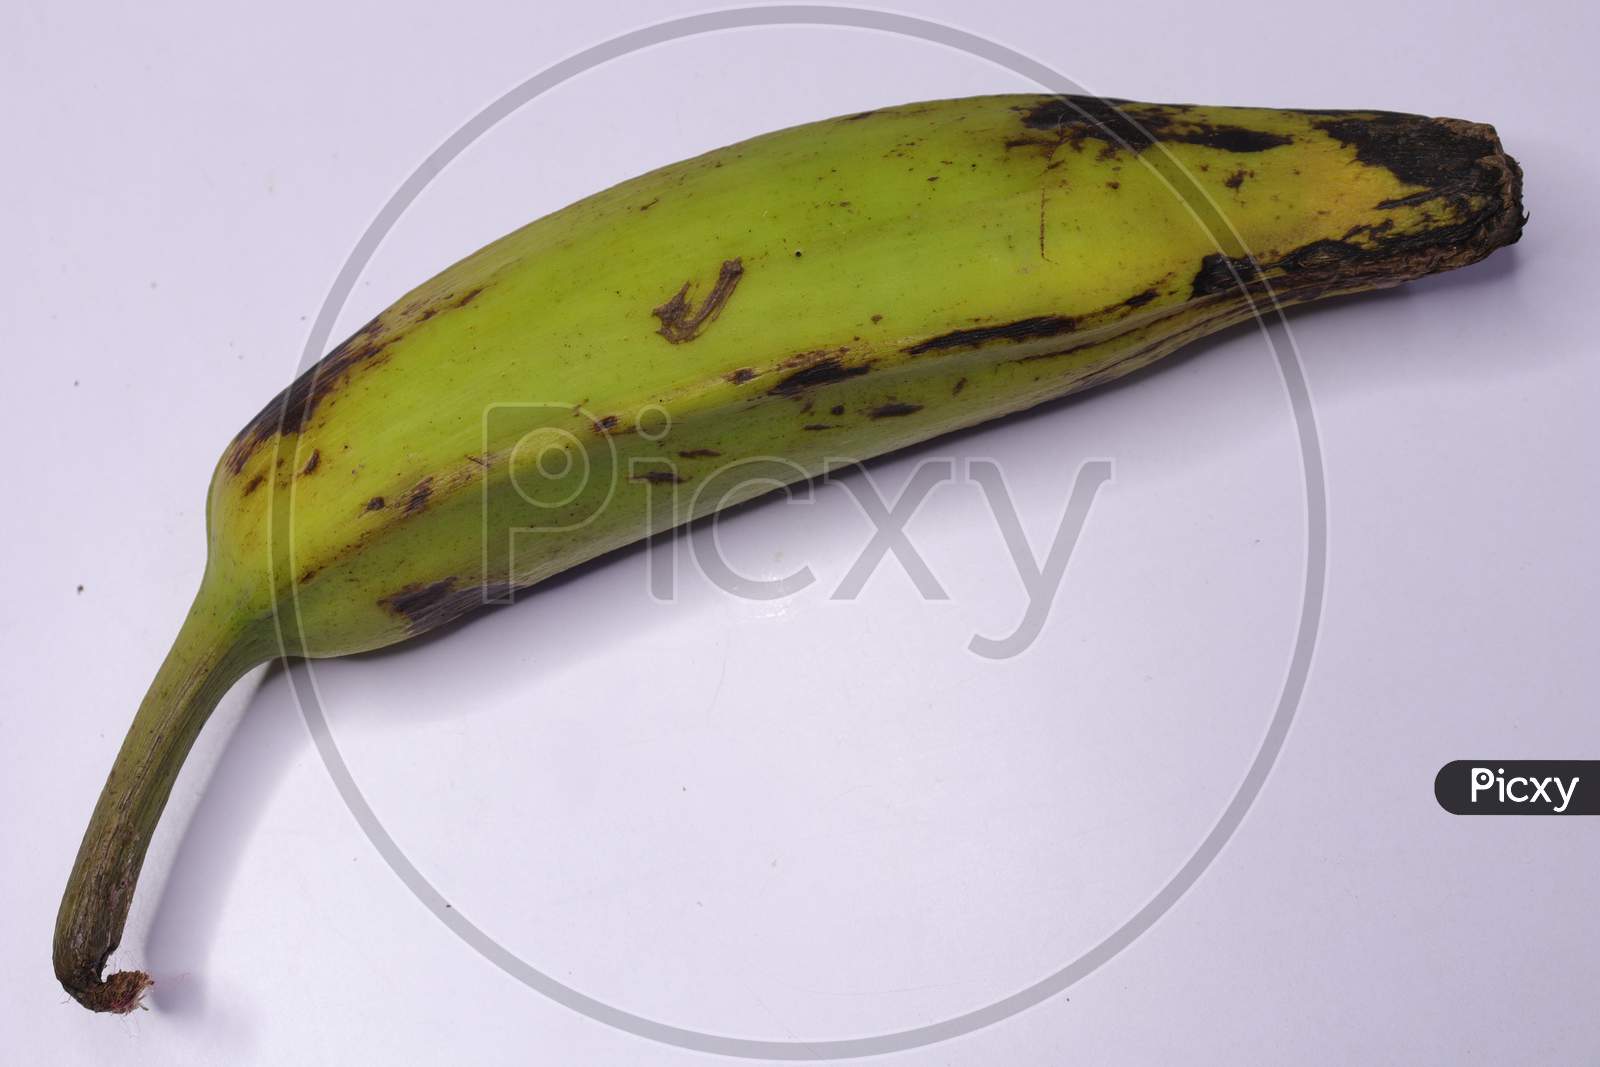 Bunch of fresh ripe bananas on white background